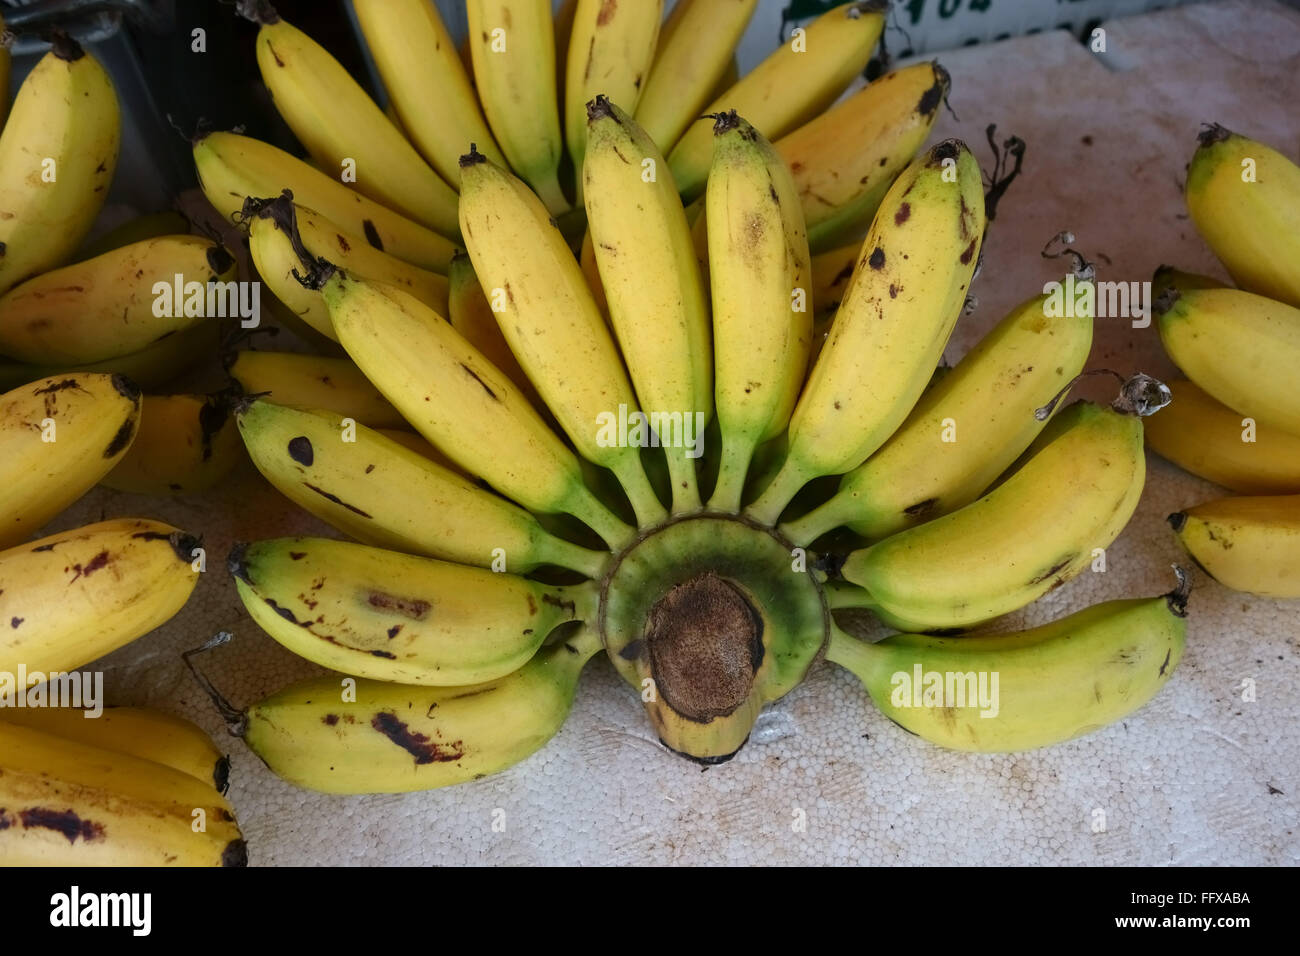 Lady-finger or sugar bananas, Musa acuminata, ripe fruit on a market stall, Bangkok, Thailand Stock Photo